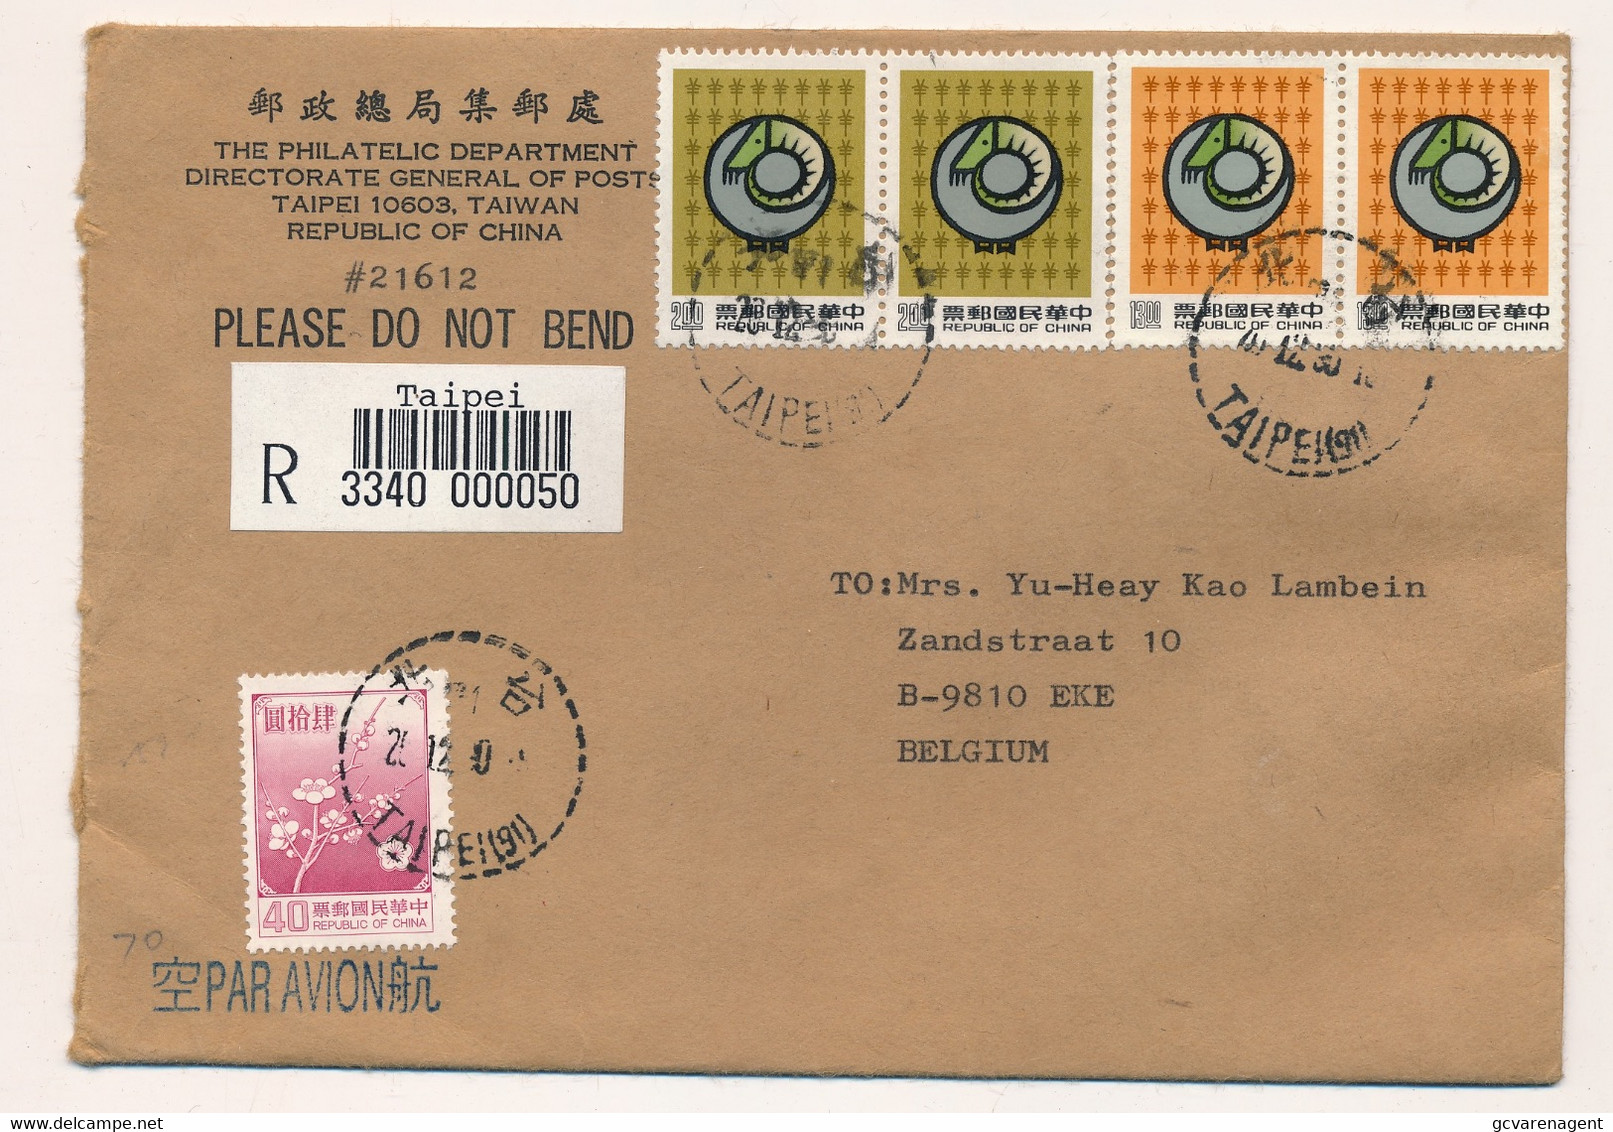 TAIWAN REPUBLIC OF CHINA     RECOMMANDE  TAIPEI - Briefe U. Dokumente